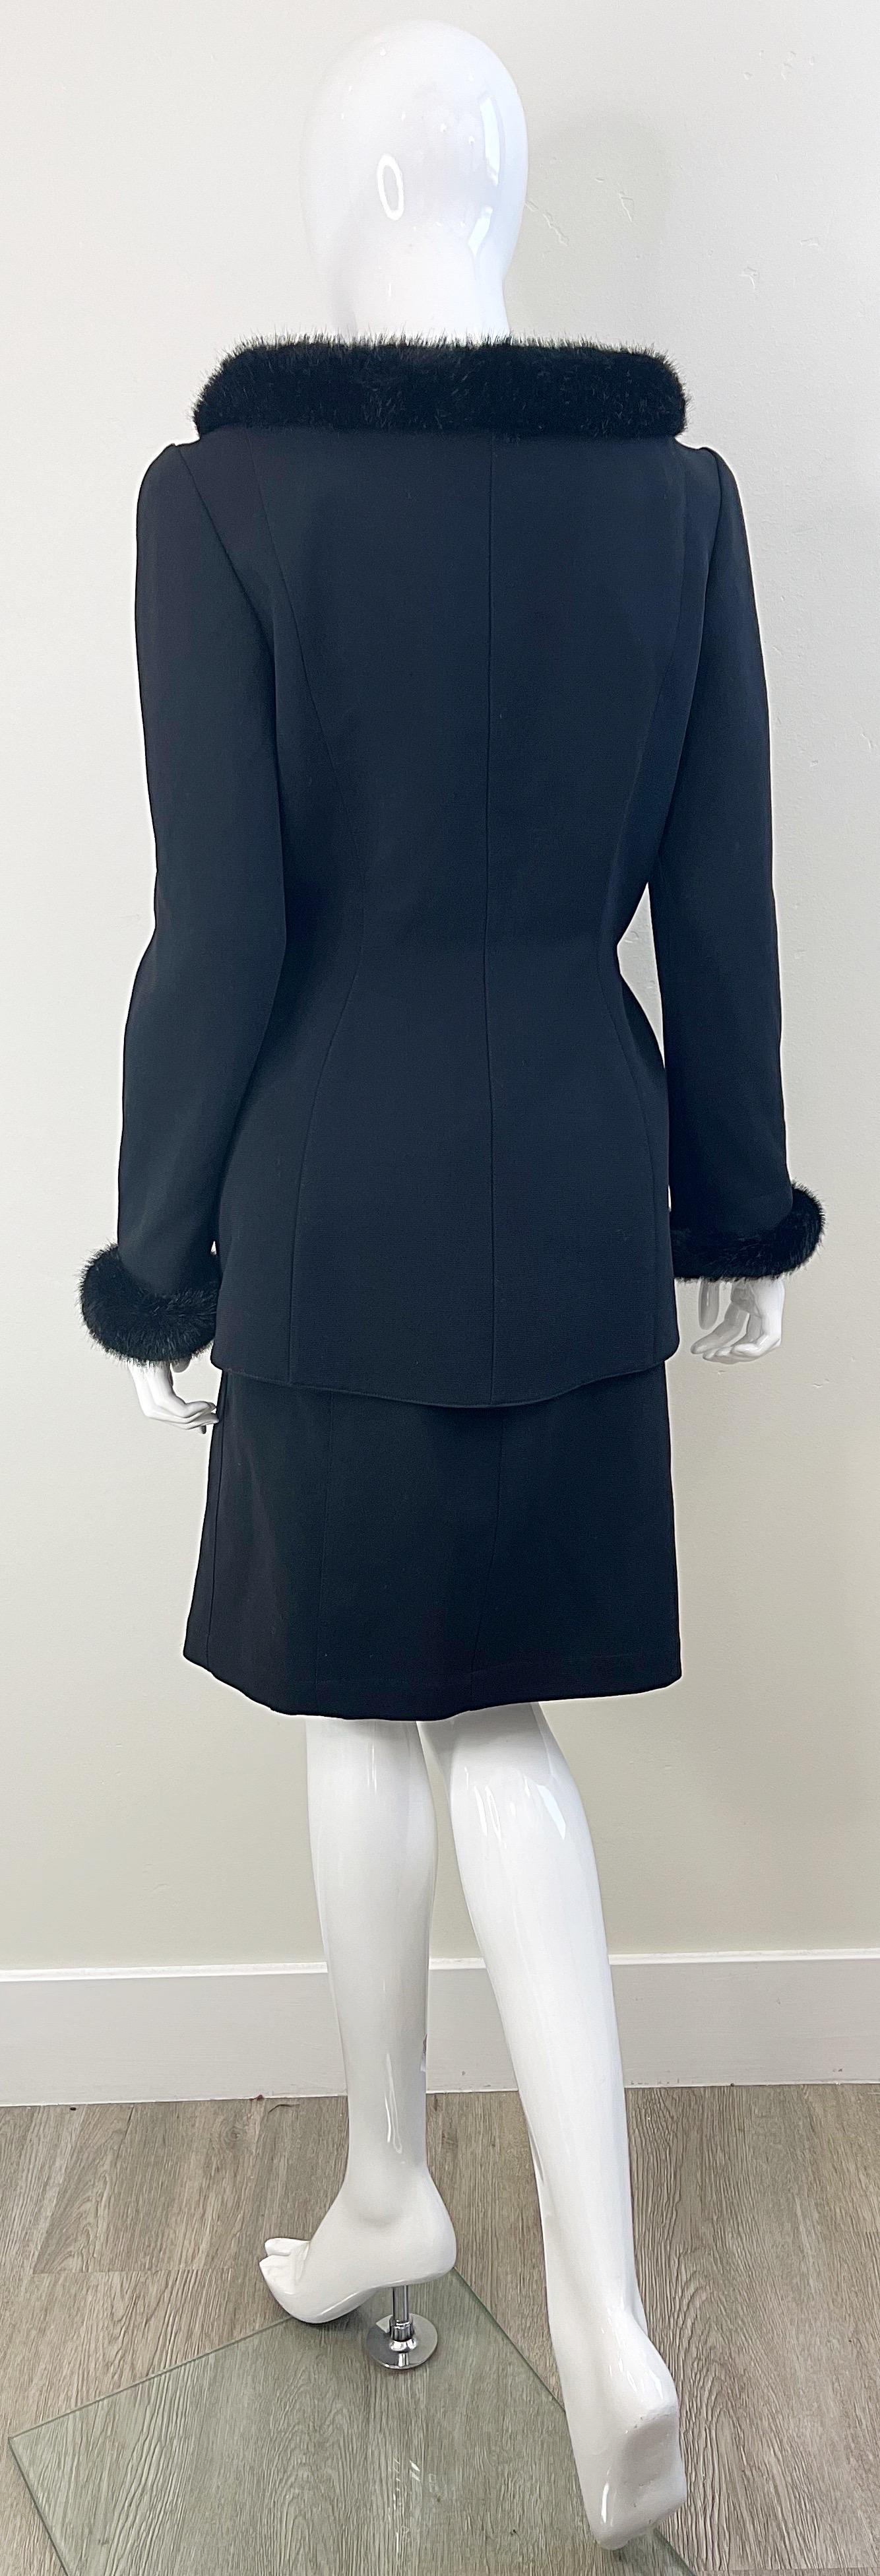 Thierry Mugler Fall 1991 Black Faux Fur Trim Size 40 / 6 Vintage 90 Skirt Suit For Sale 12